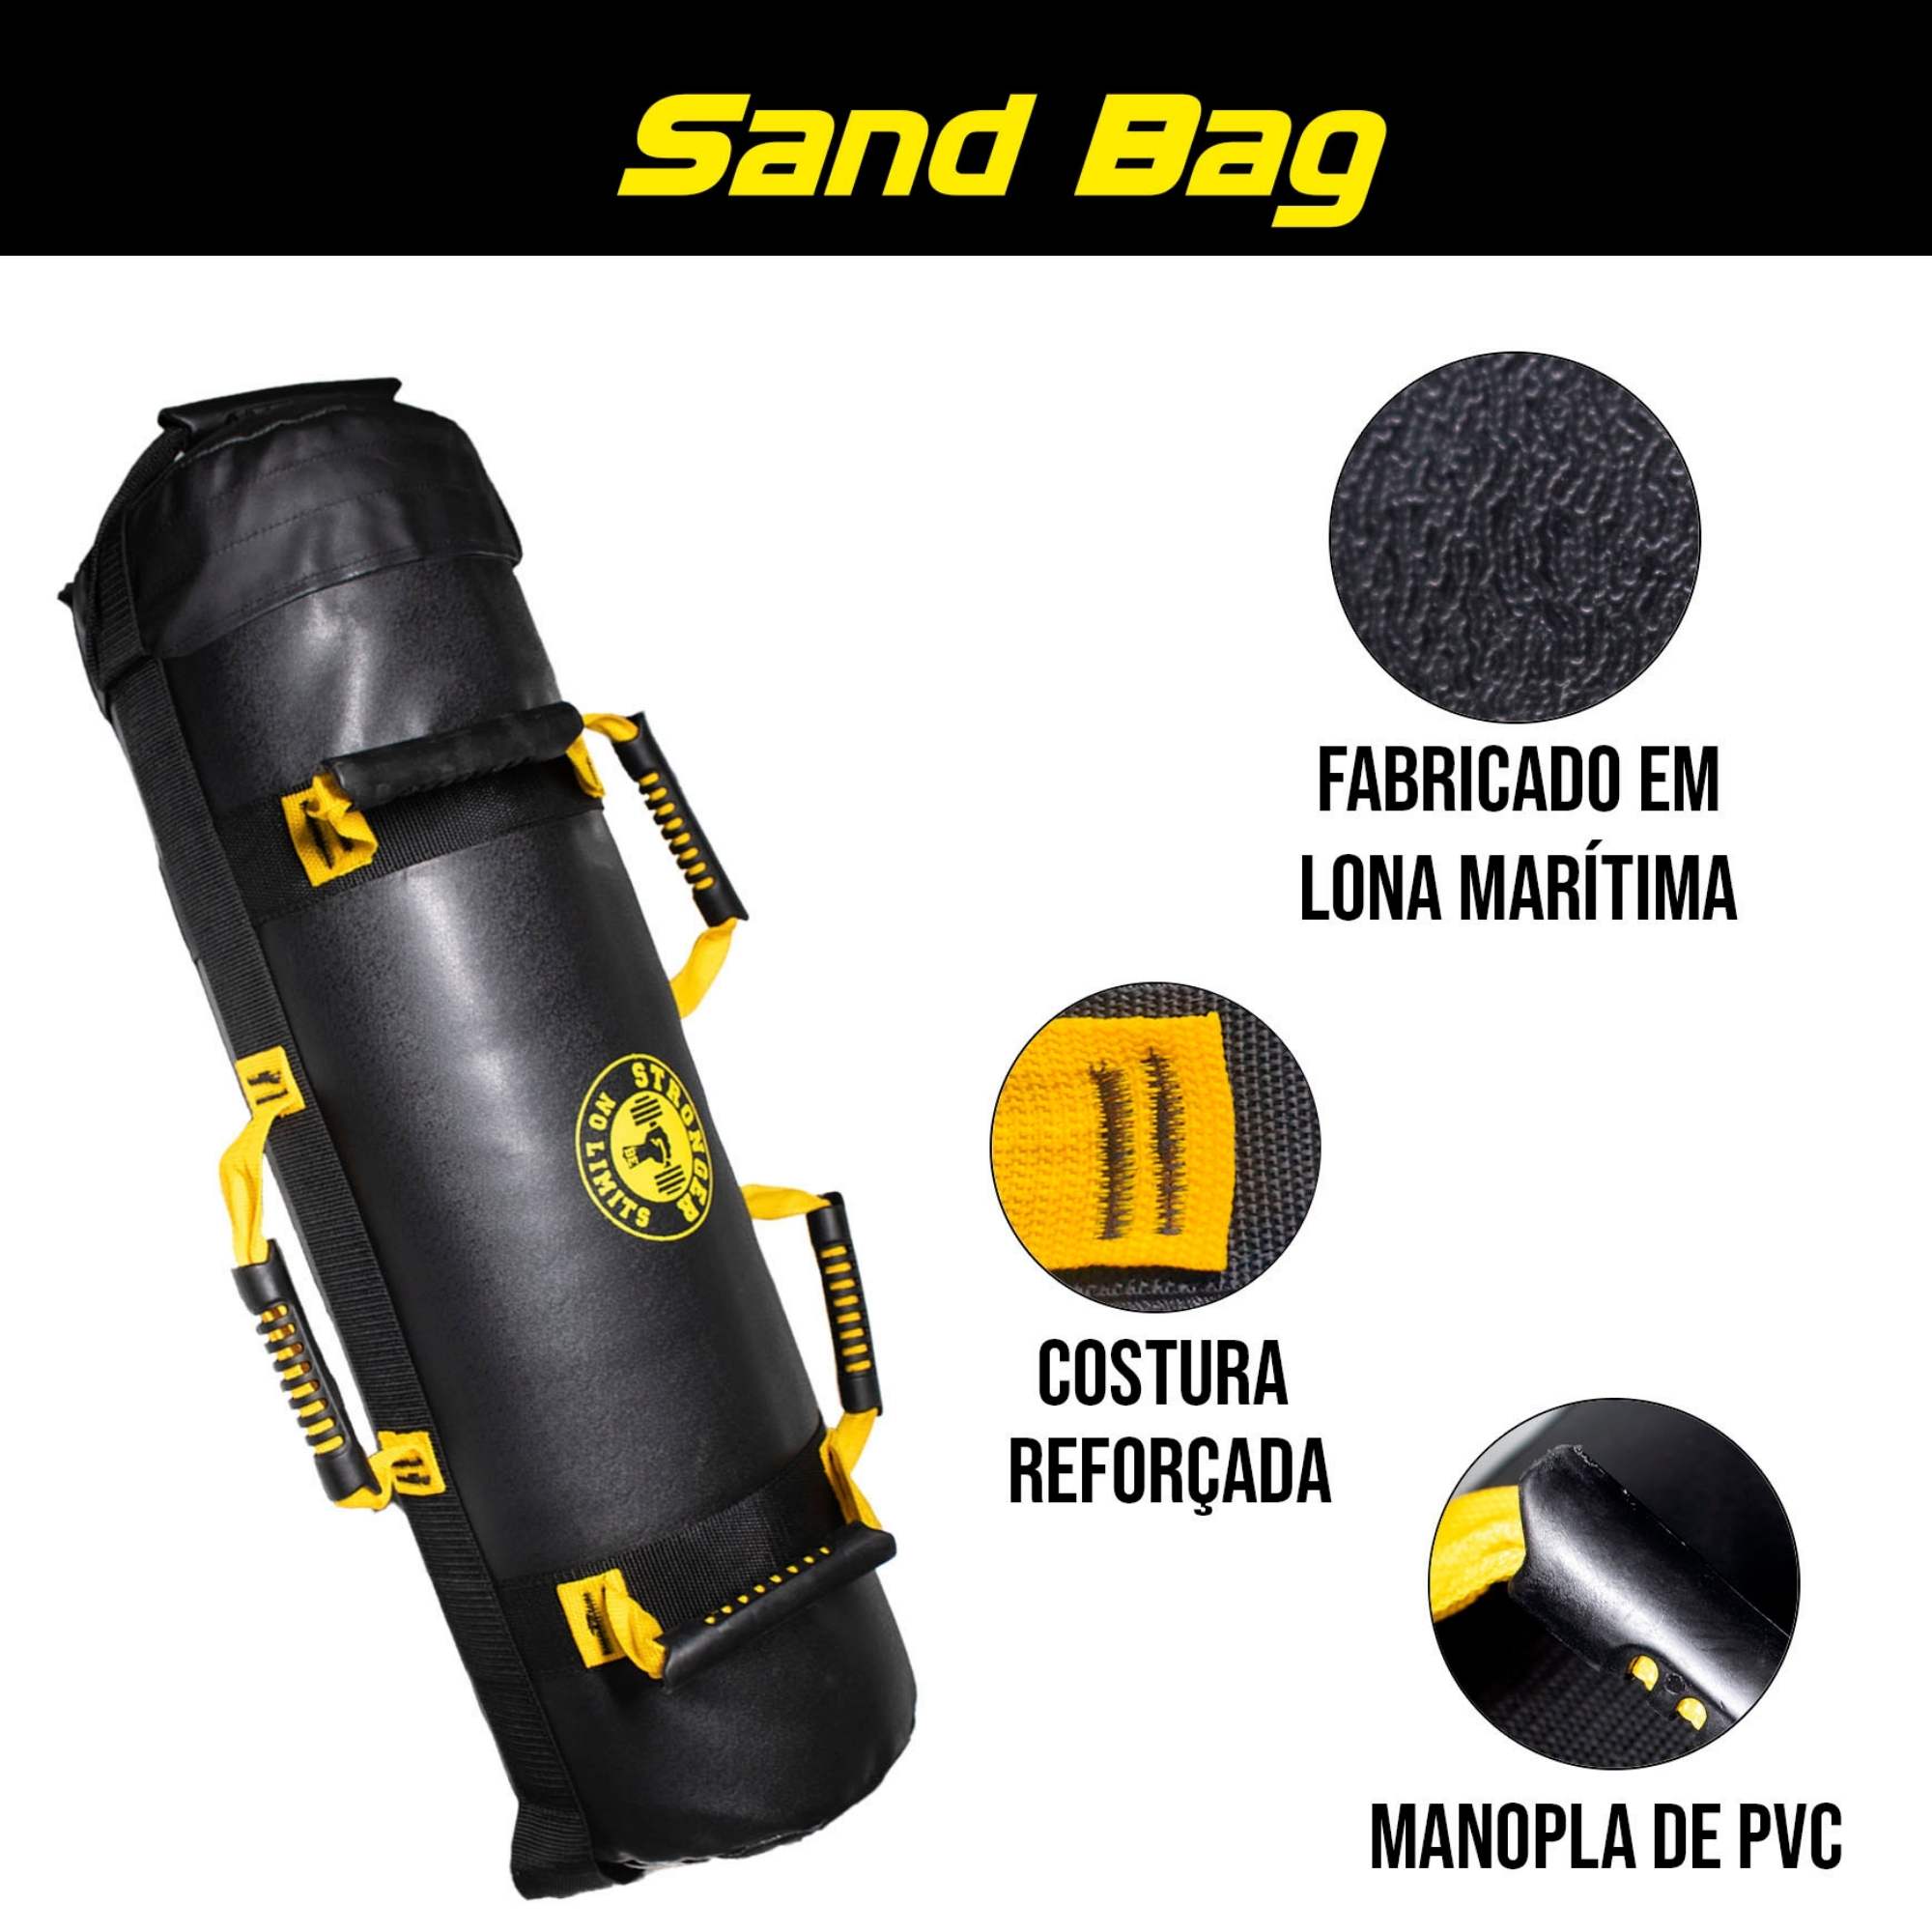 Sand Bag (Power Bag) Peso:25KG